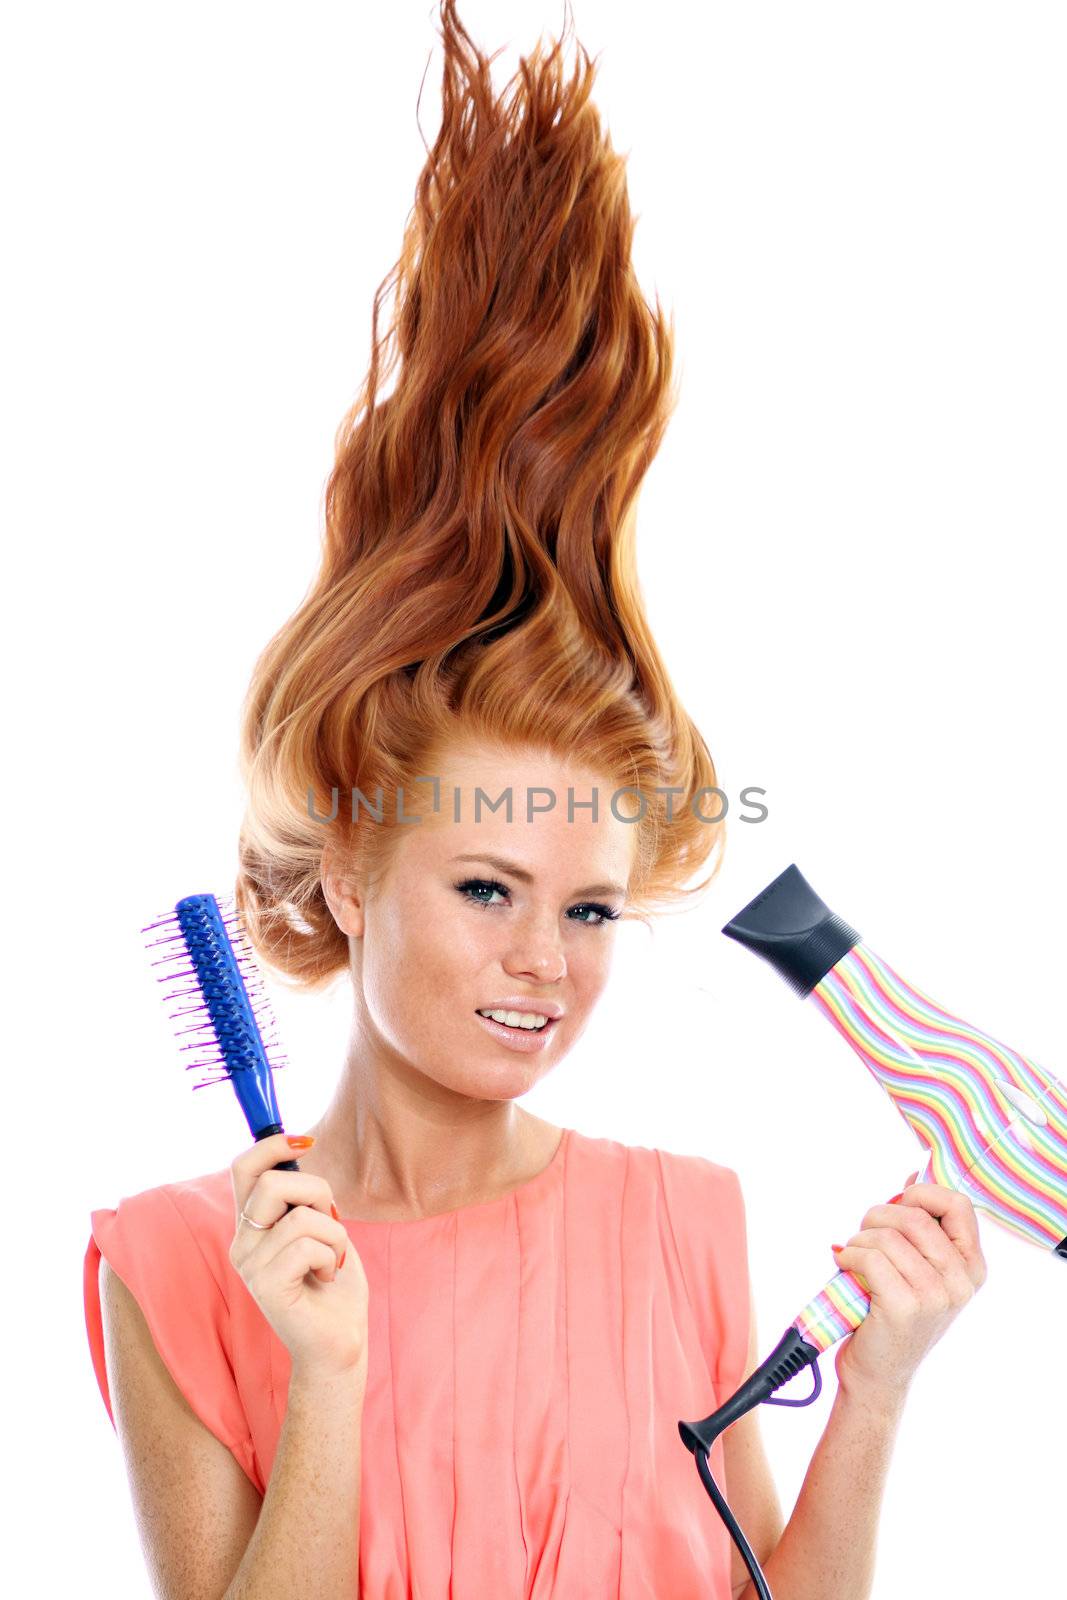 Beauty salon by andersonrise